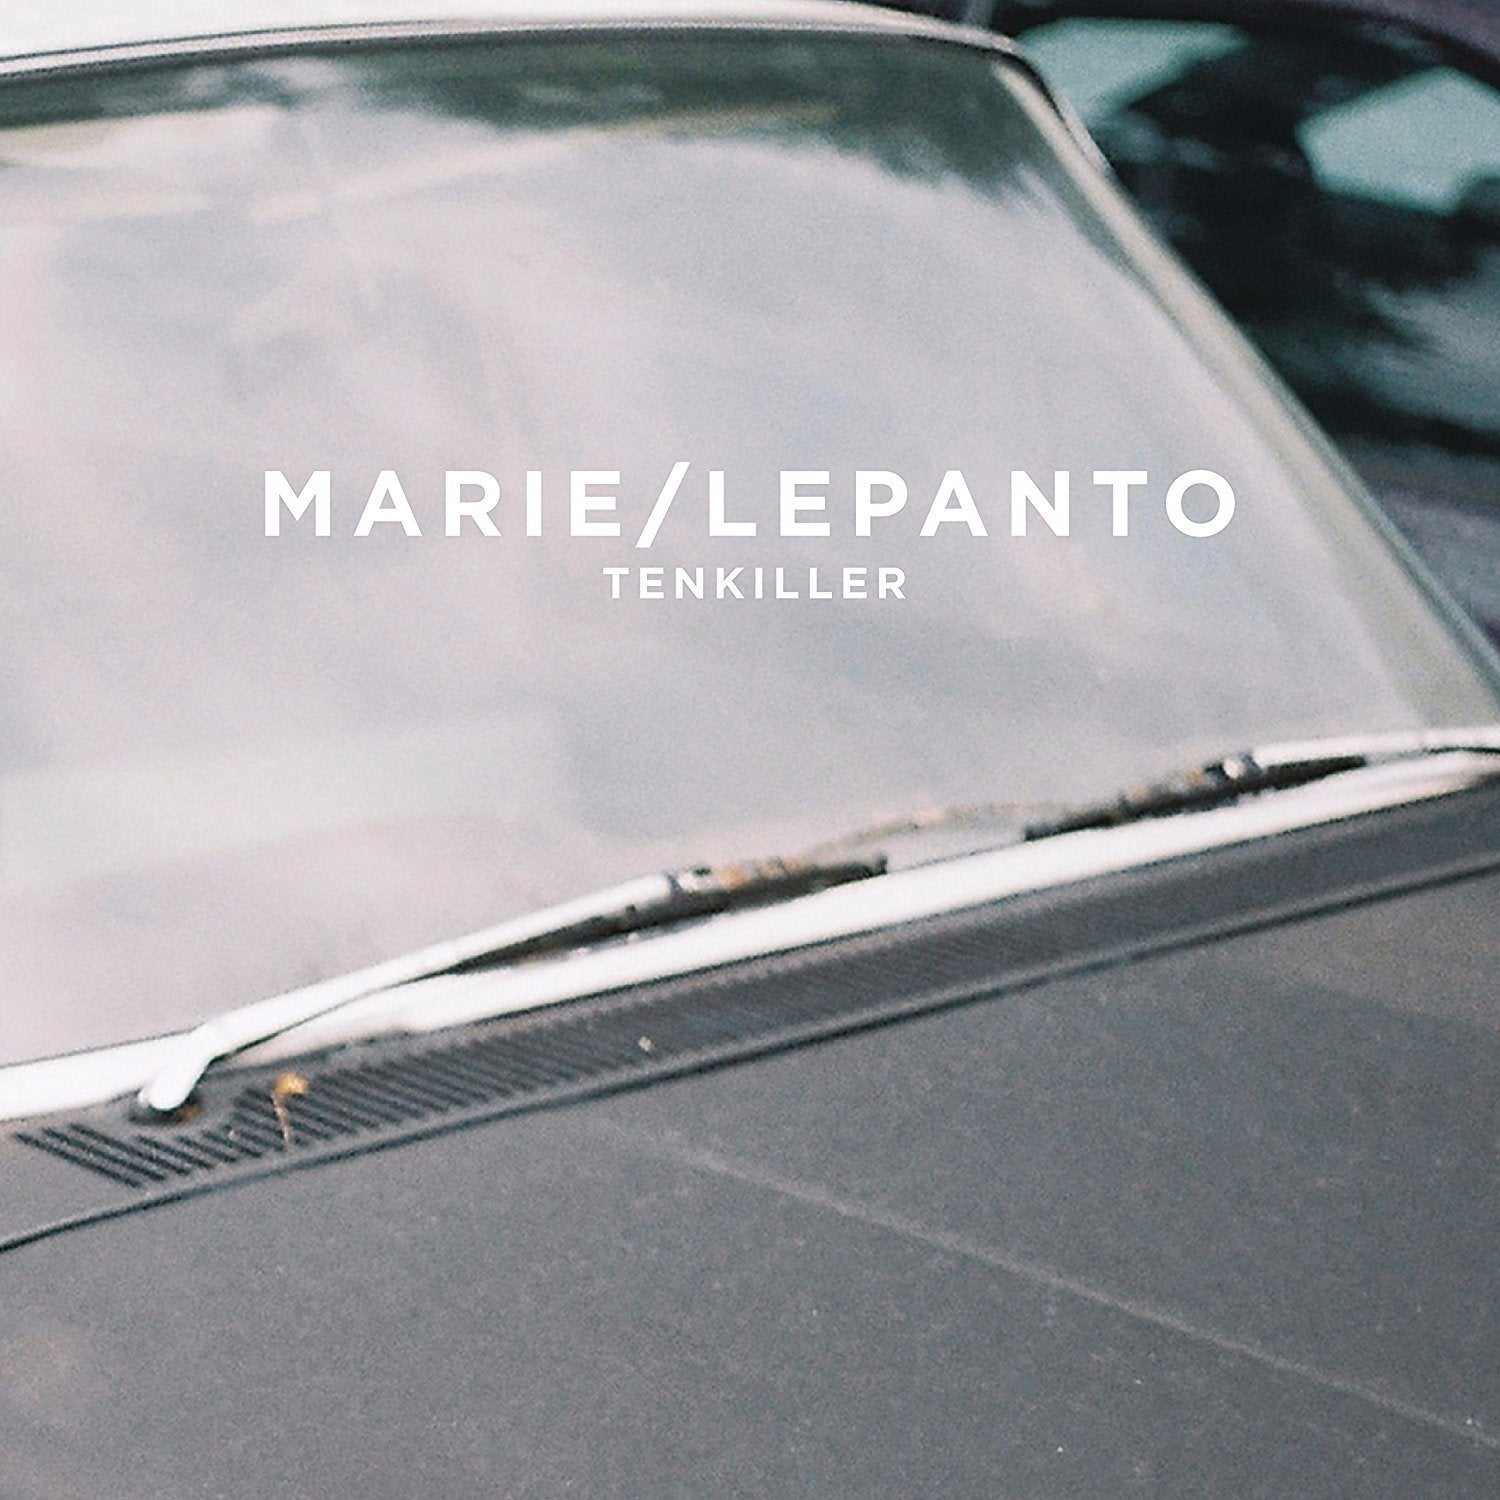 Marie/Lepanto